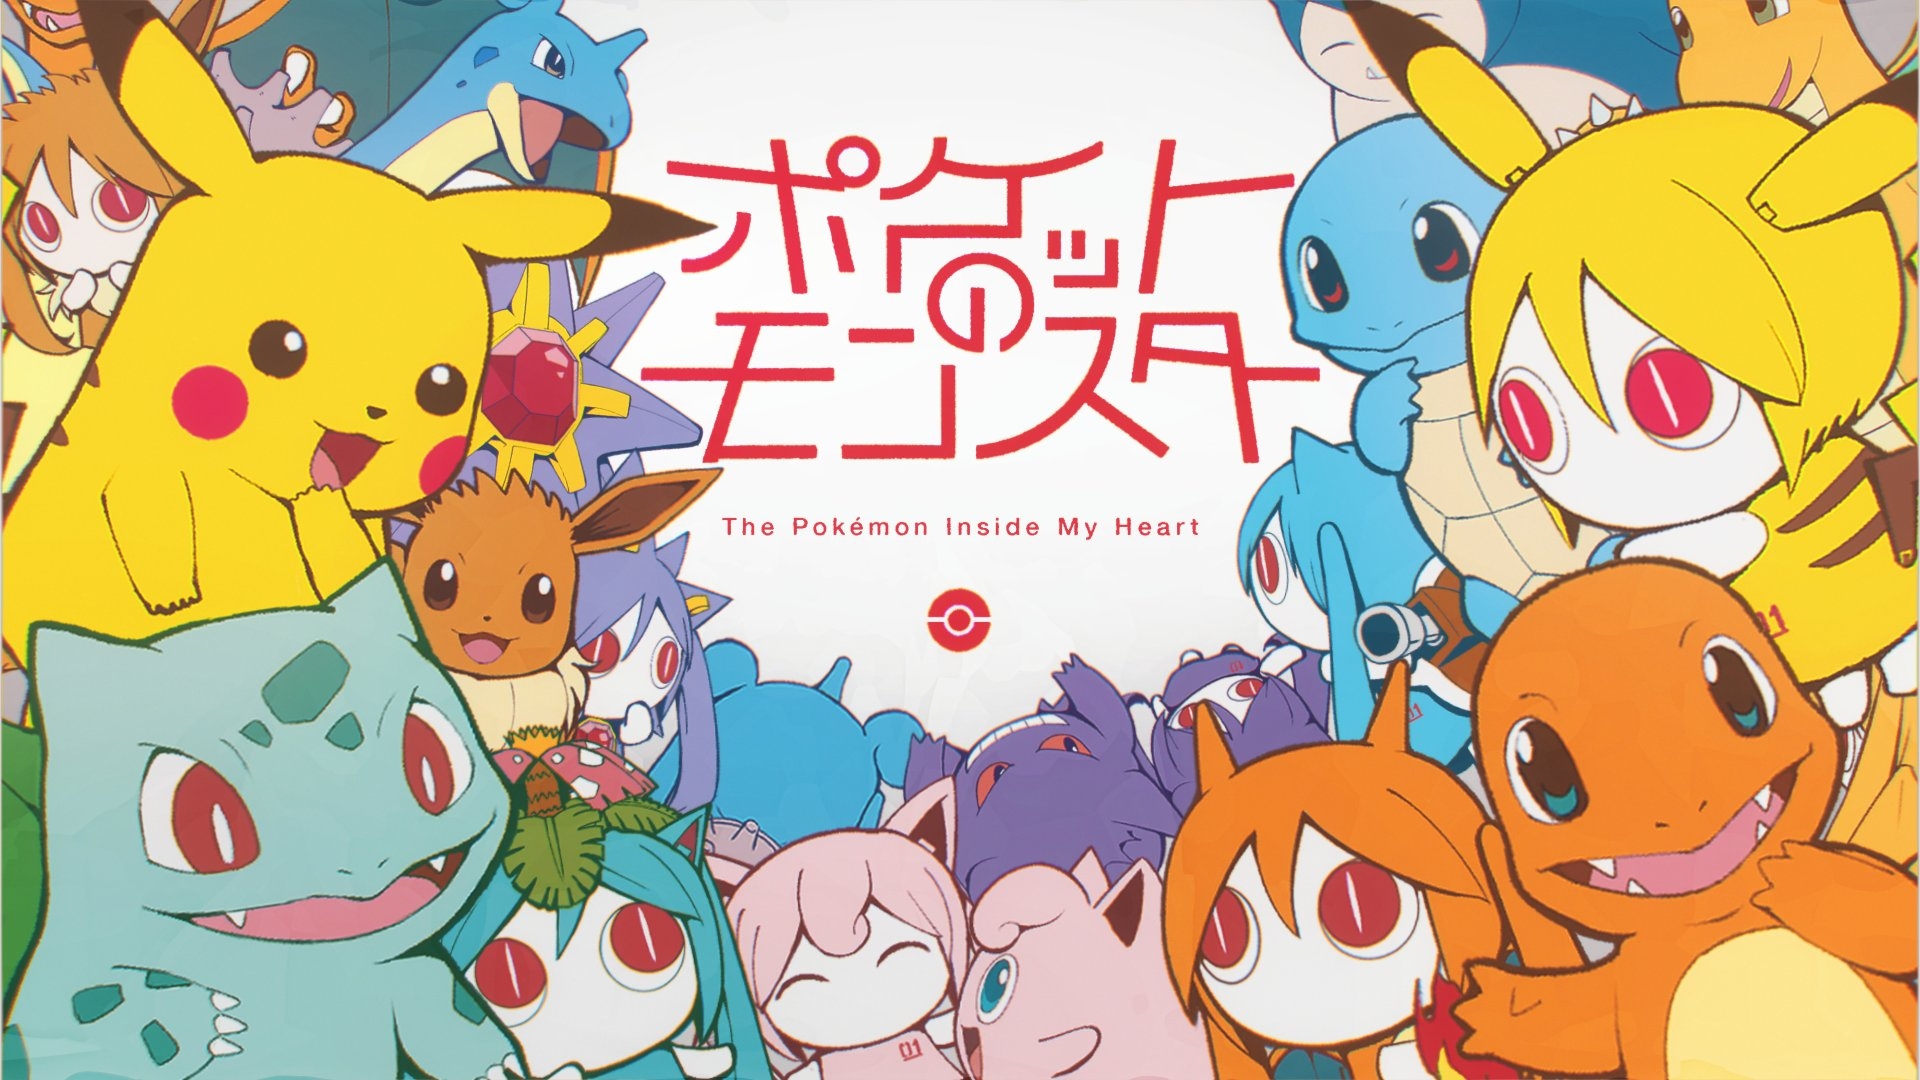 The Pokémon Inside My Heart feat. Hatsune Miku, by PinocchioP - Title card and key art